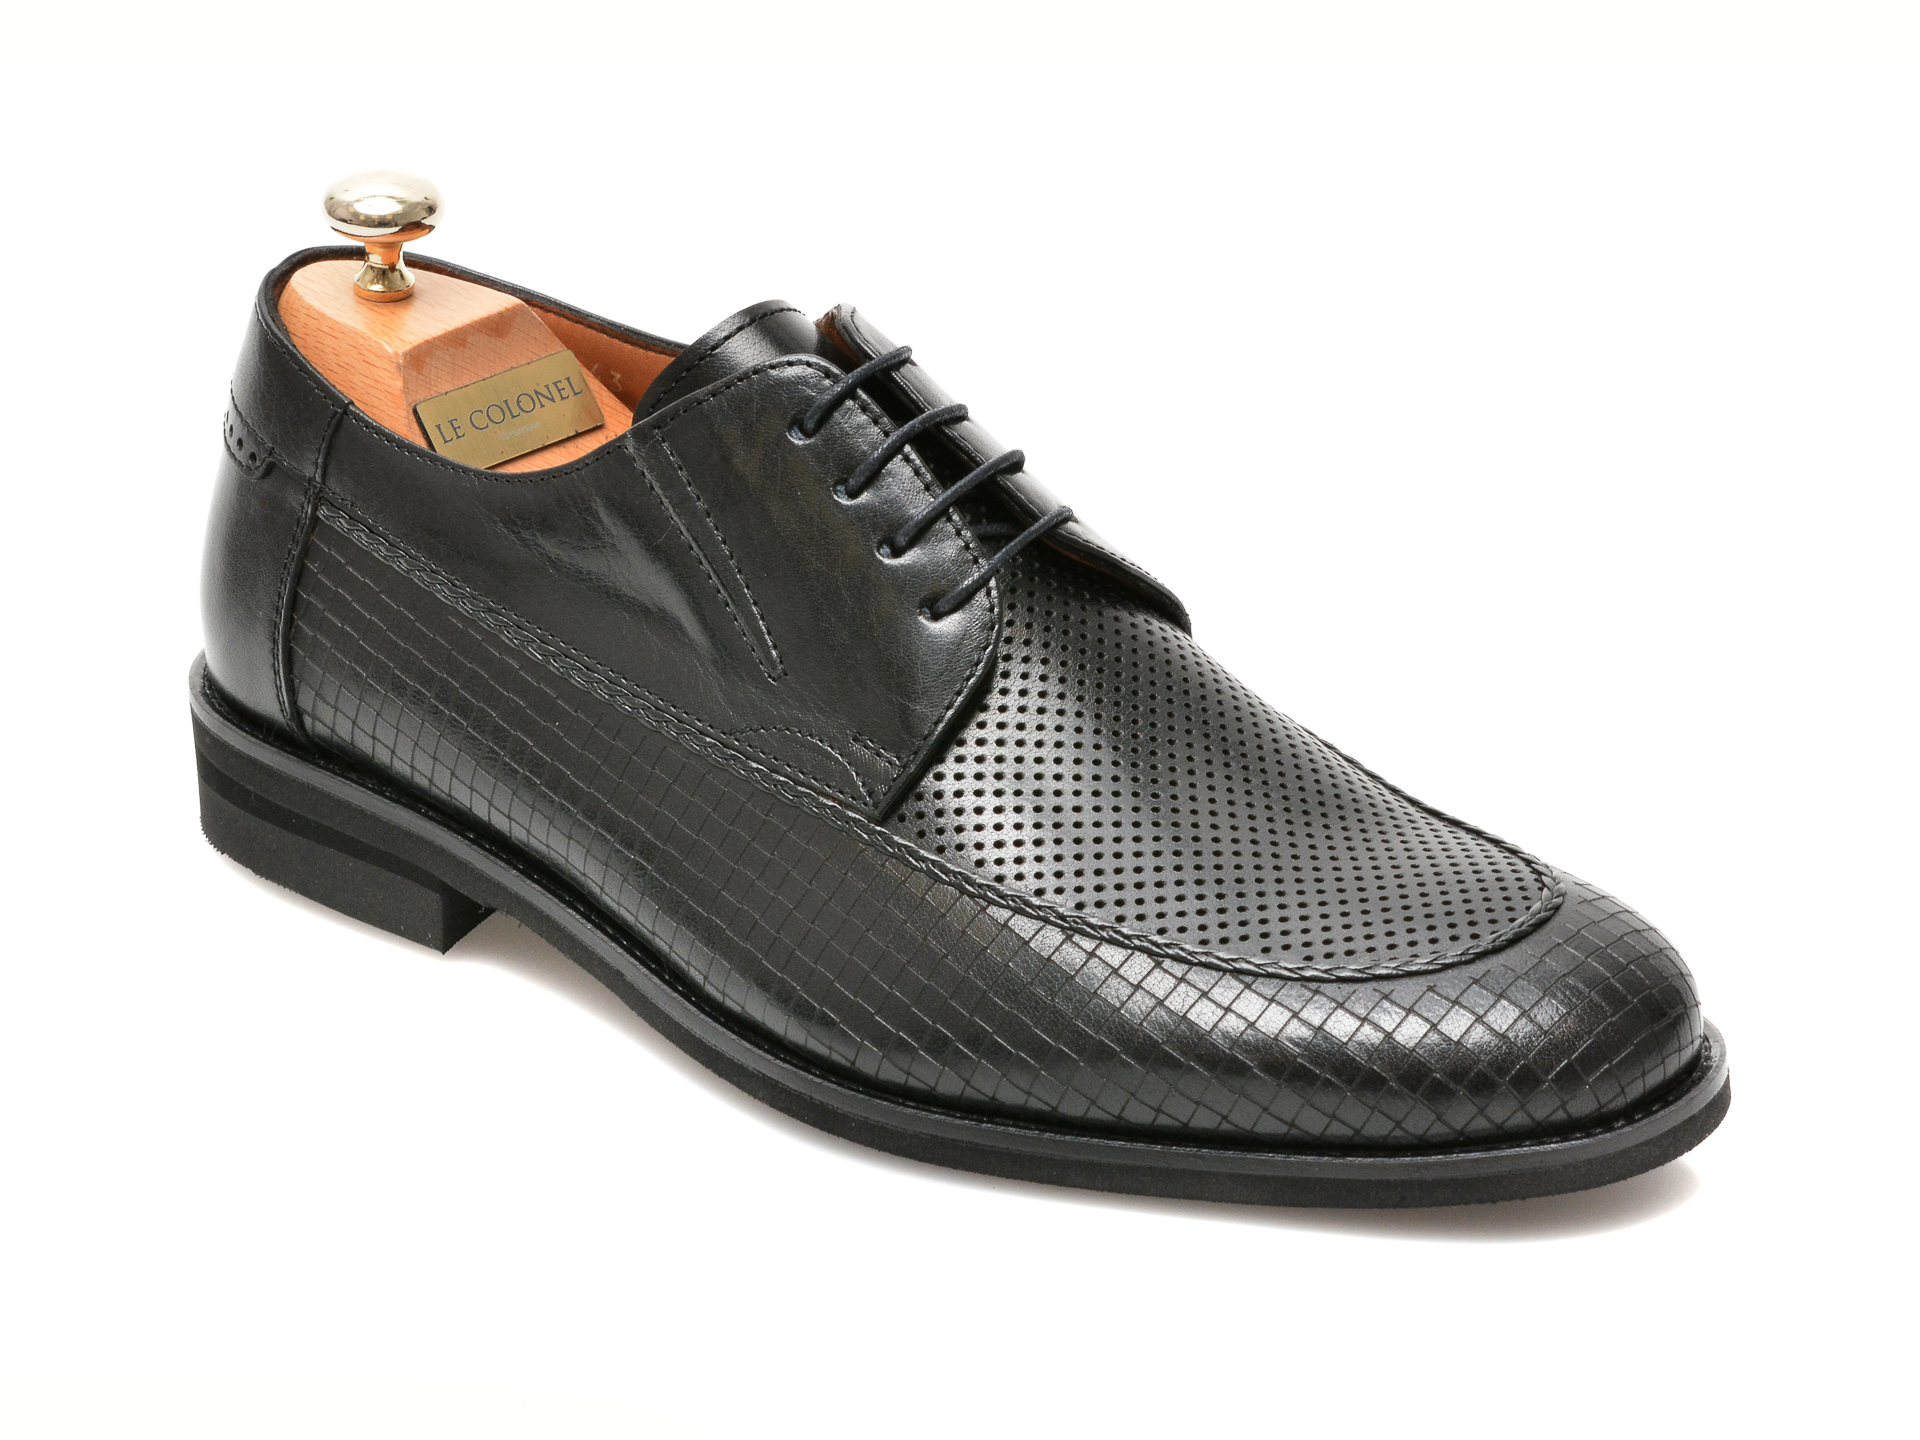 Pantofi LE COLONEL negri, 48856, din piele naturala imagine reduceri black friday 2021 Le Colonel